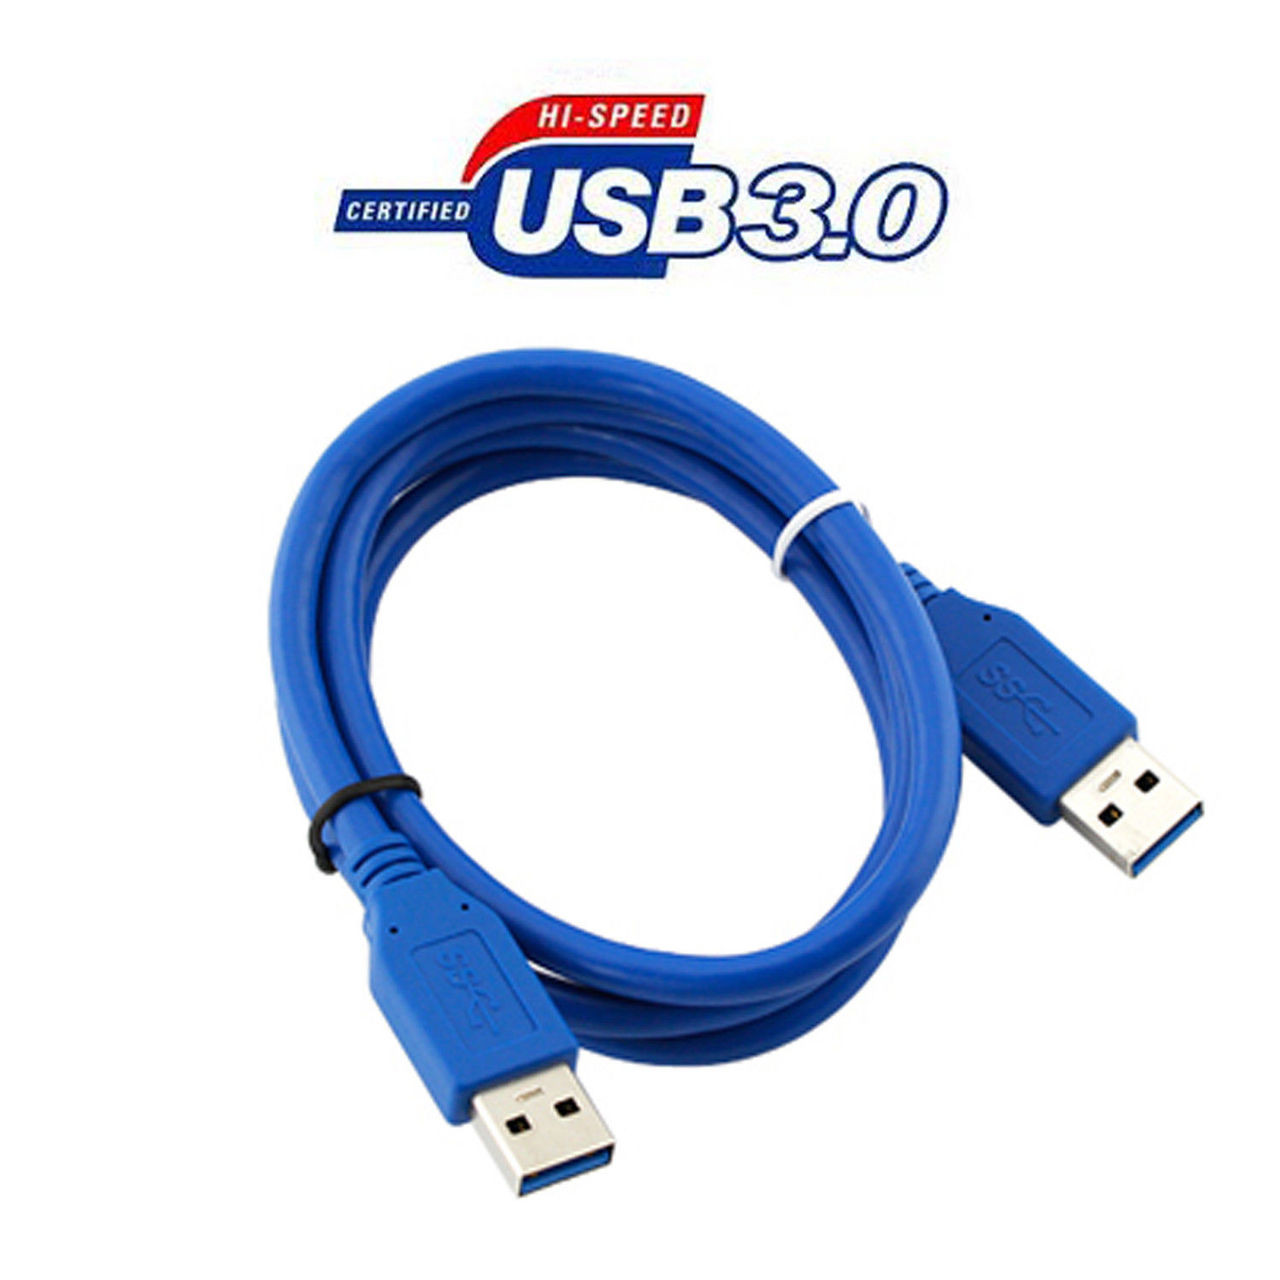 usb 3.0 cord